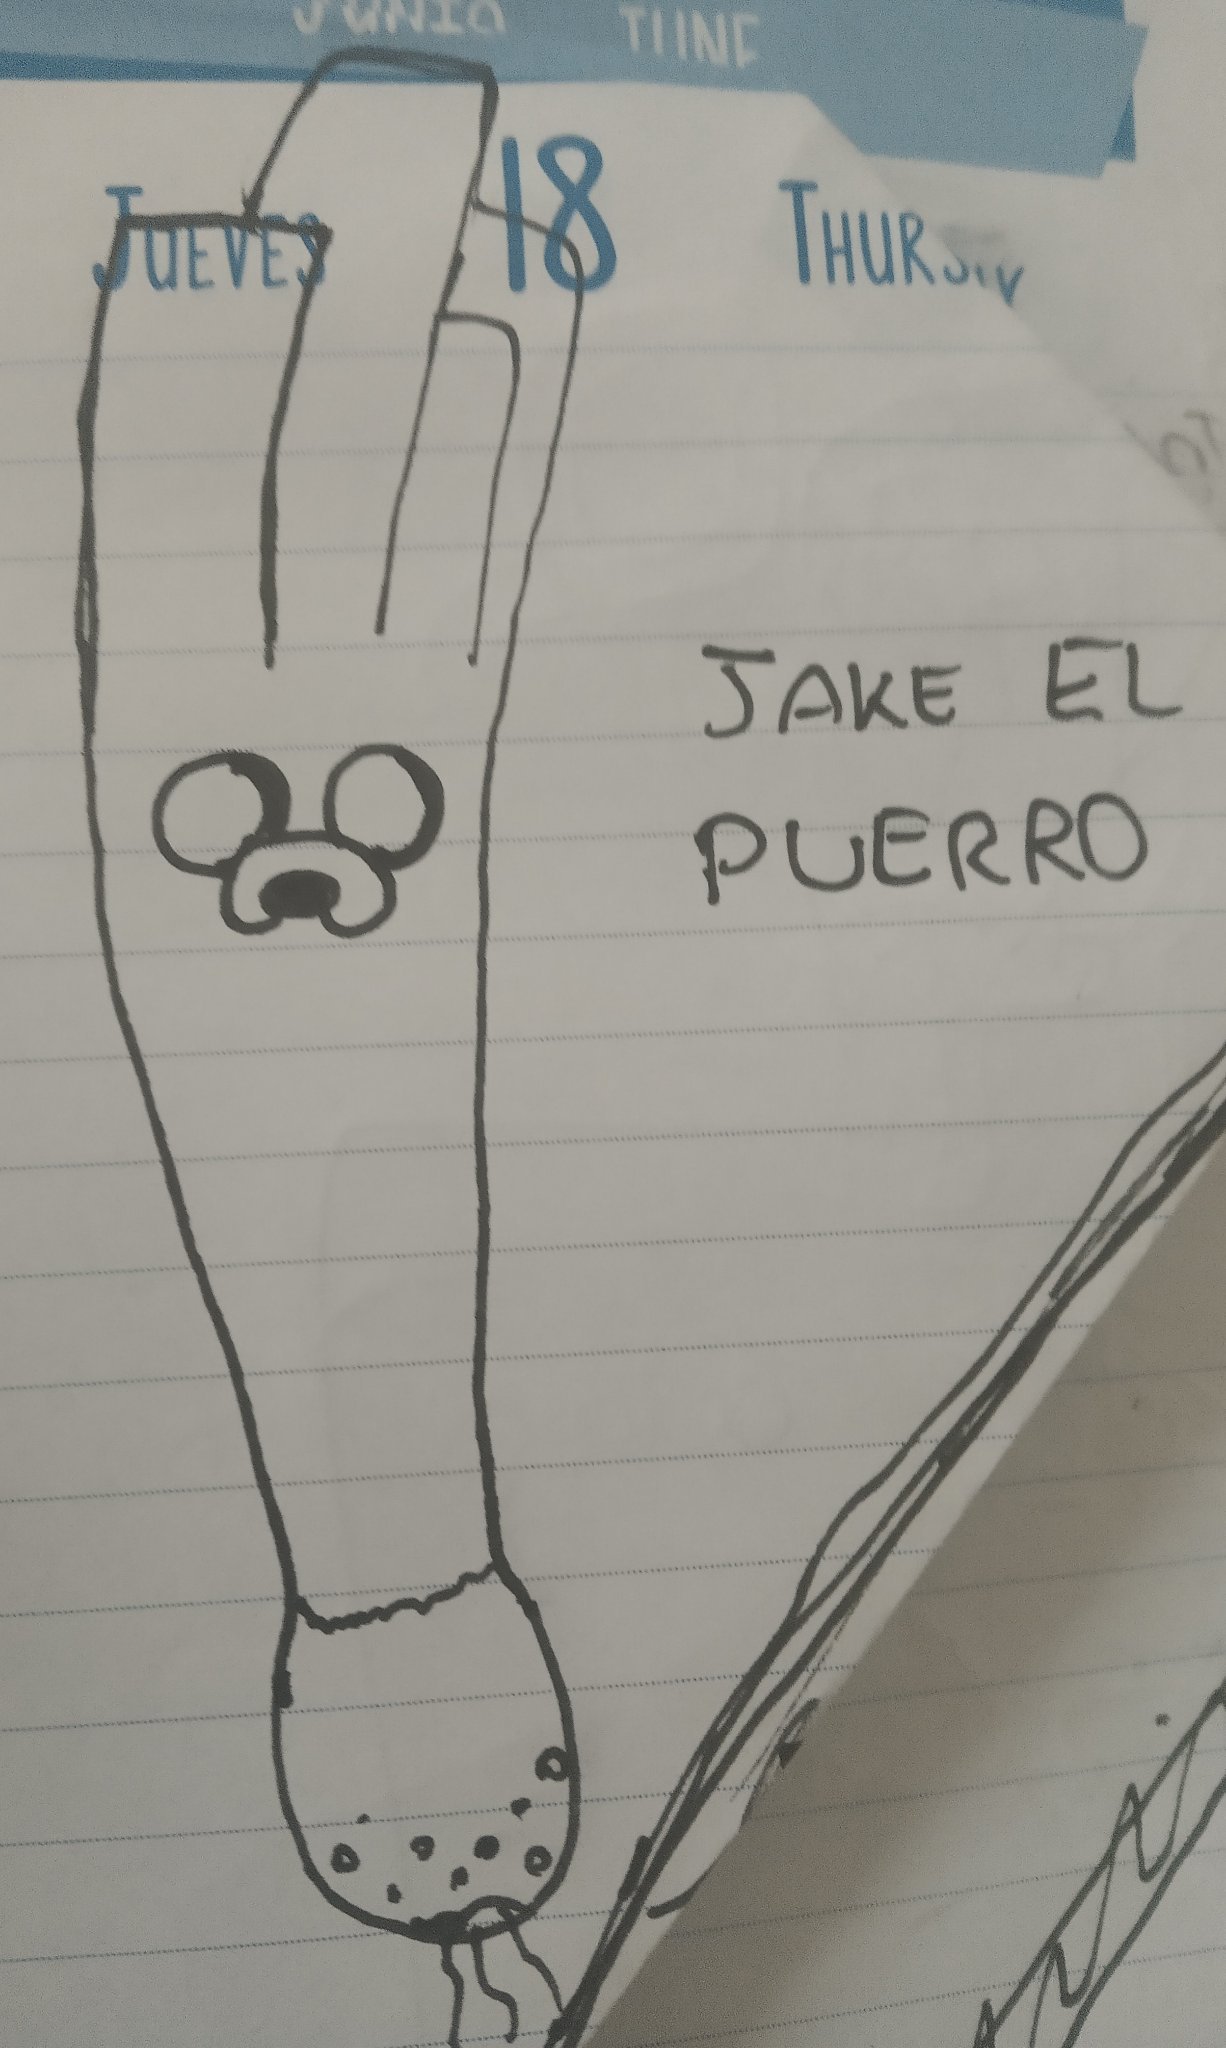 Jake el puerro - meme